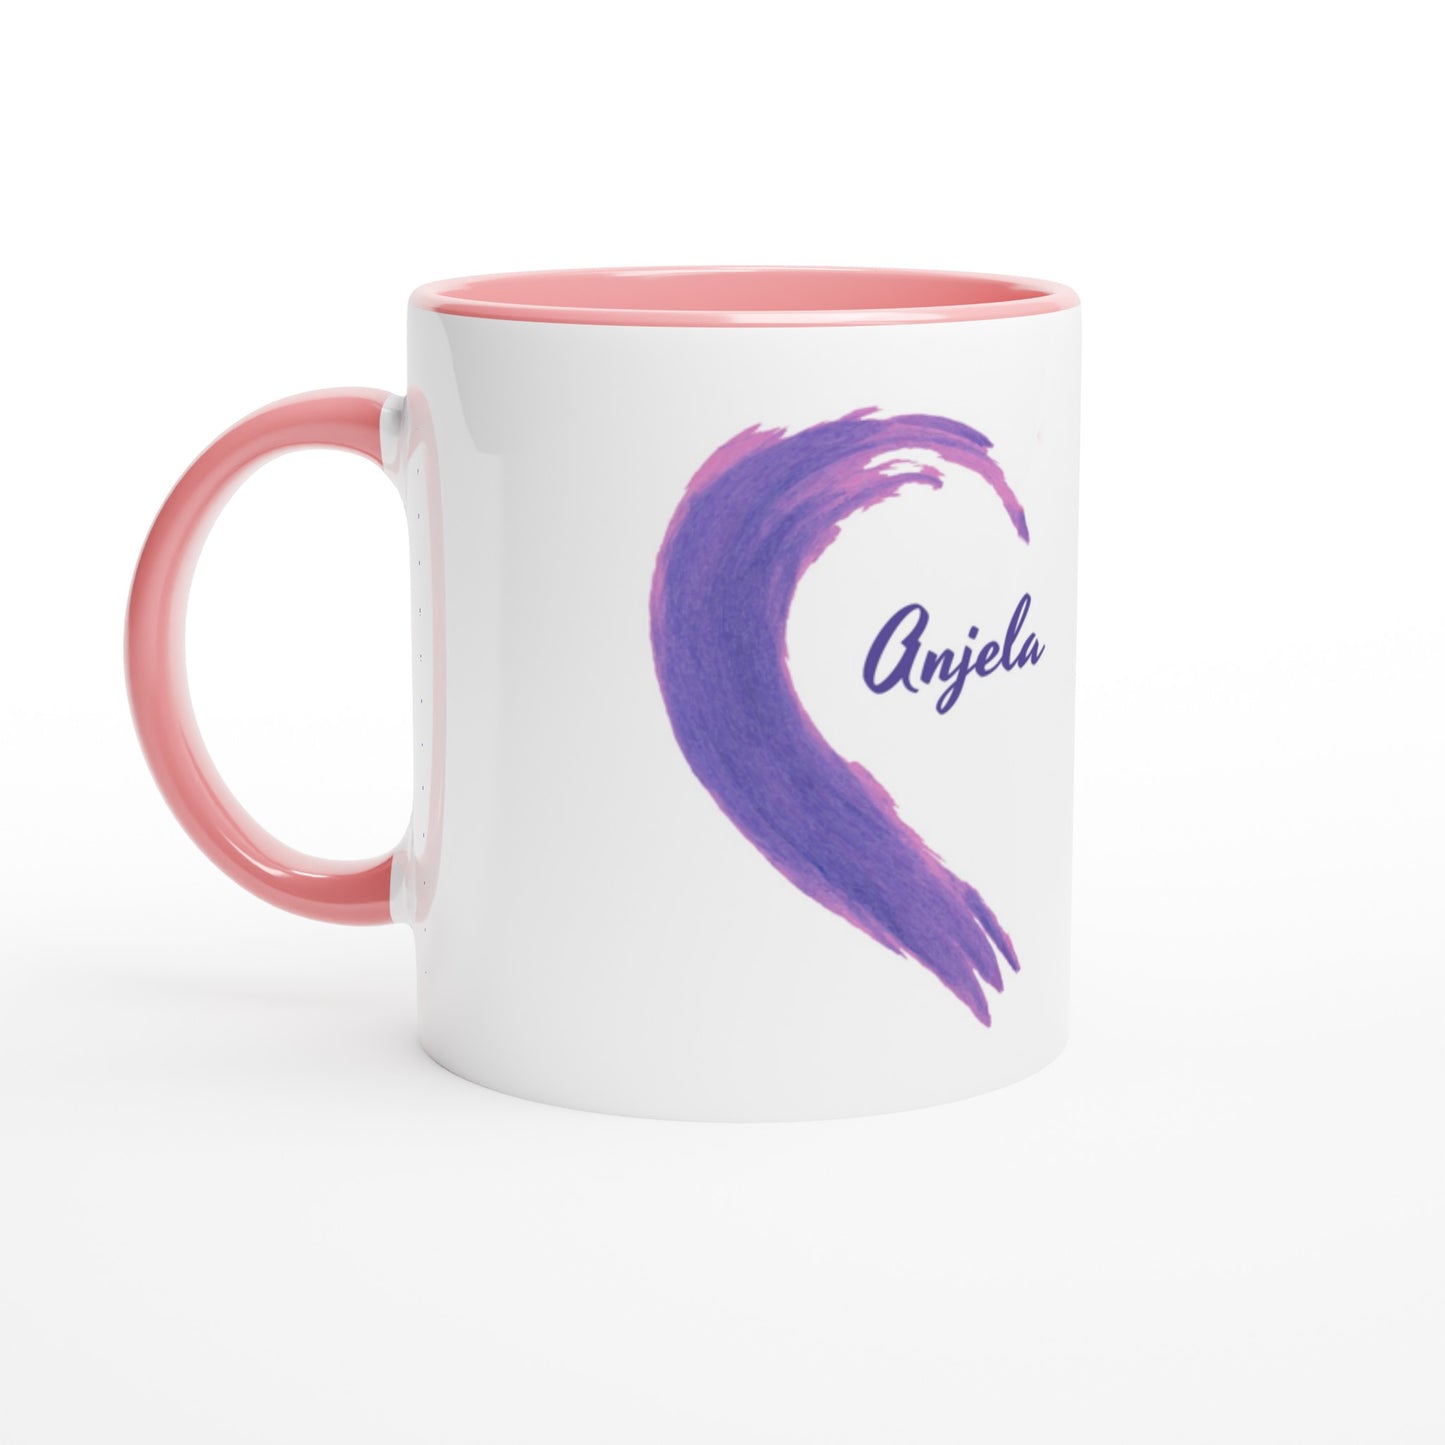 Personalizable Ceramic Mug with Color Inside "Anjela"